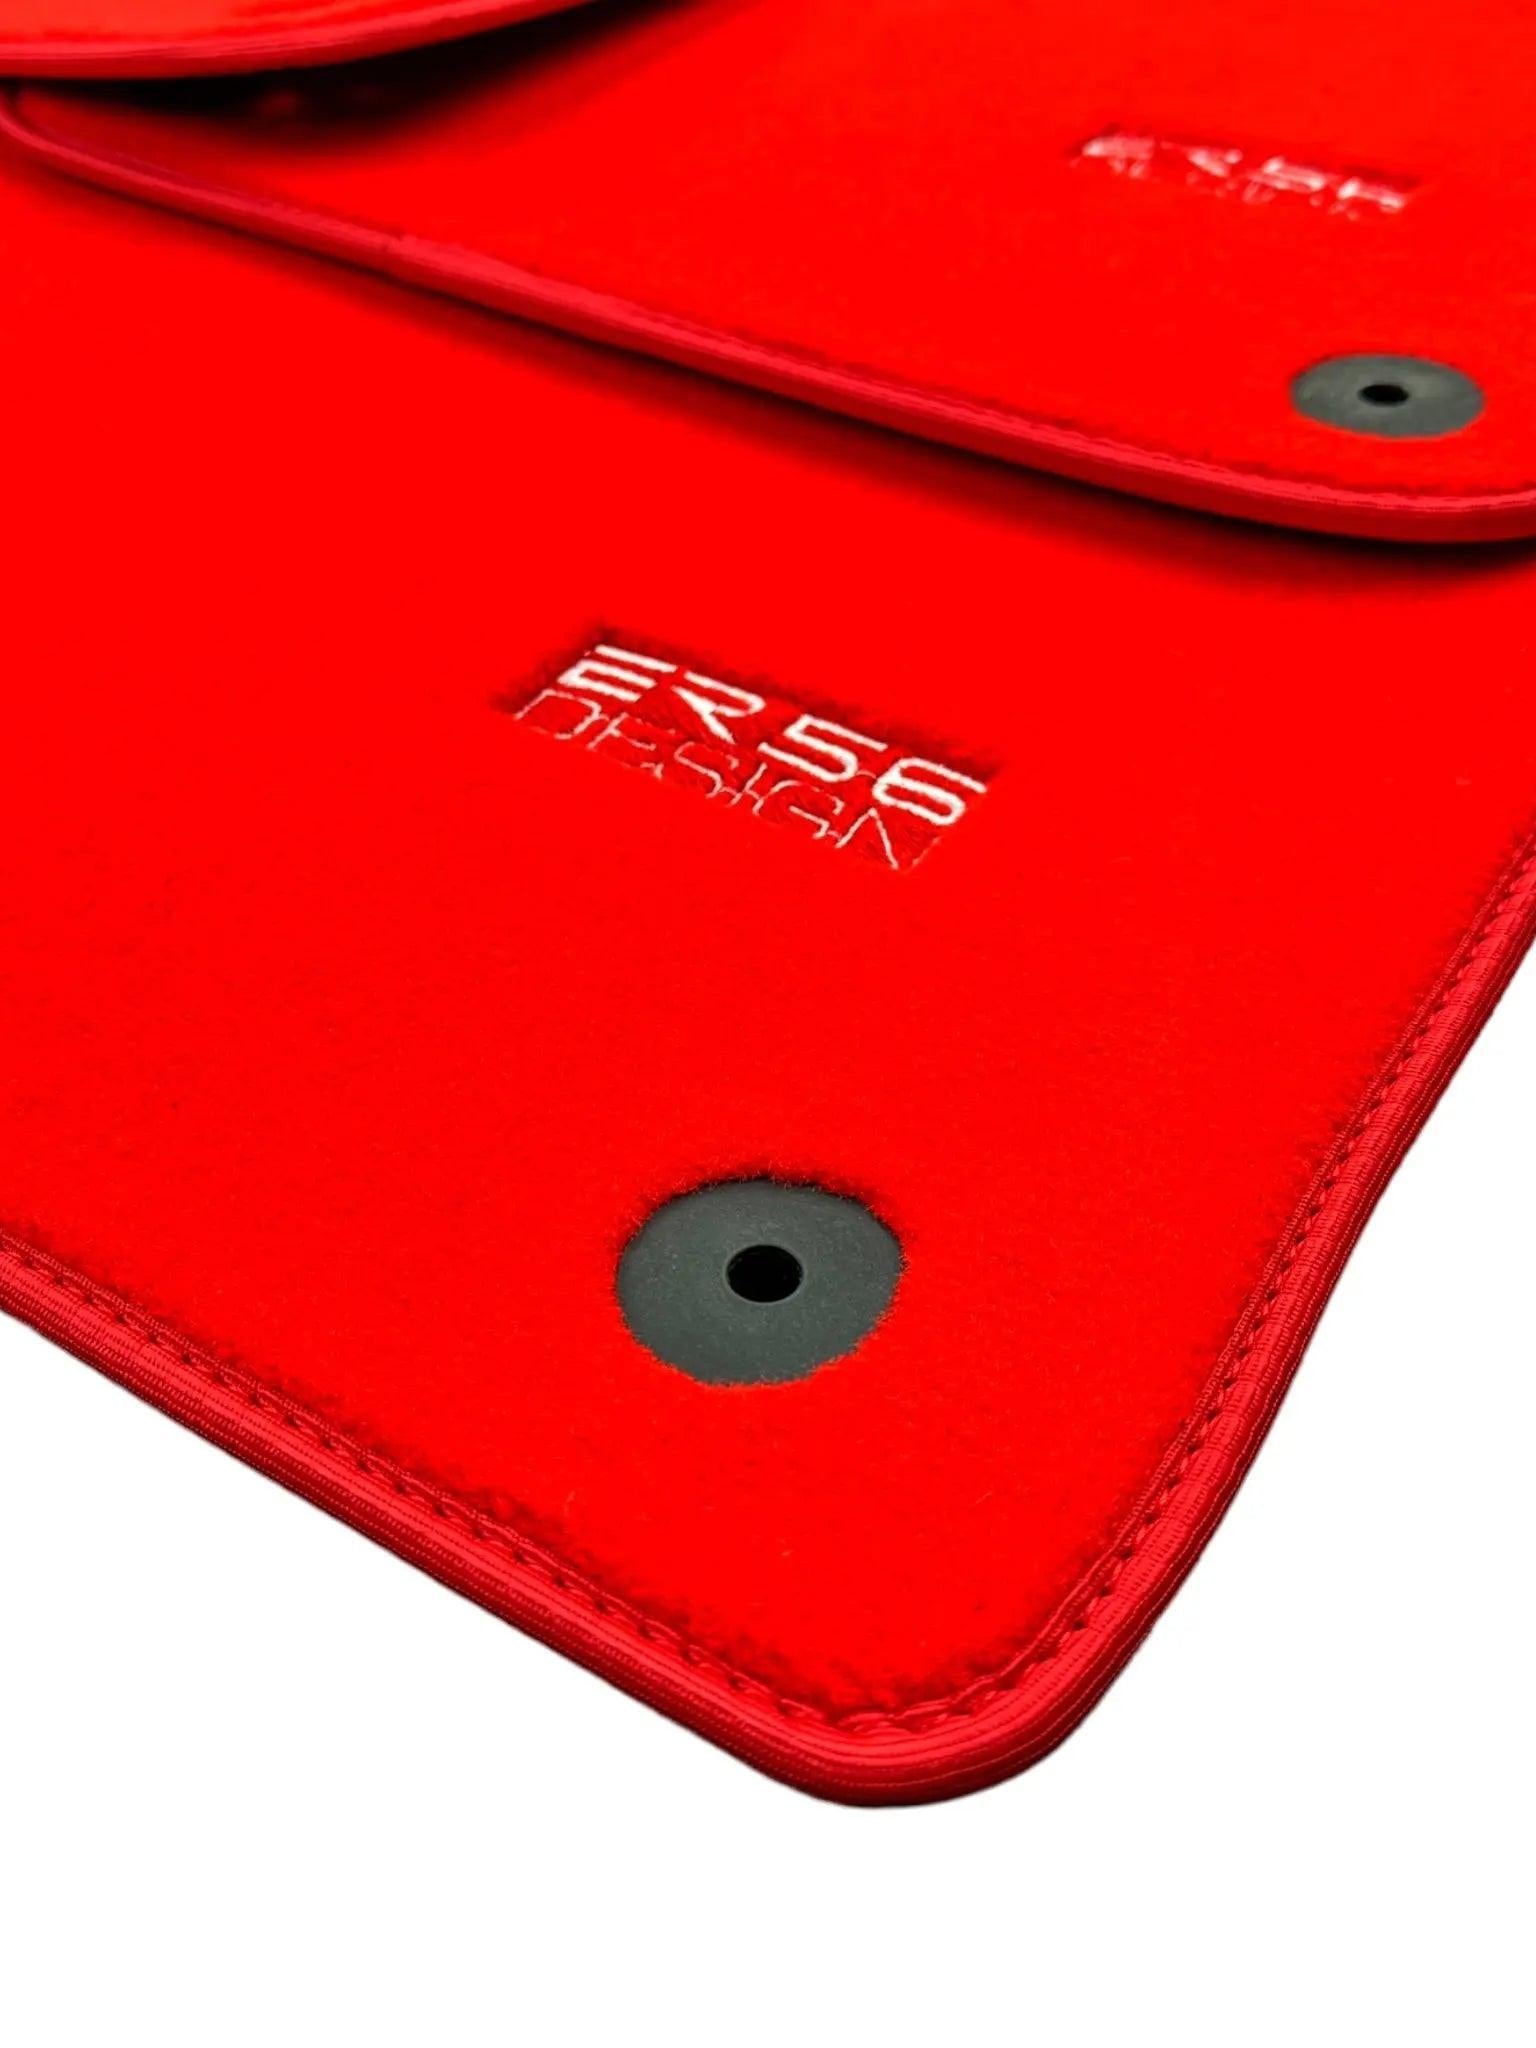 Red Floor Mats for Audi A6 - C6 Avant Facelift (2008-2011) | ER56 Design